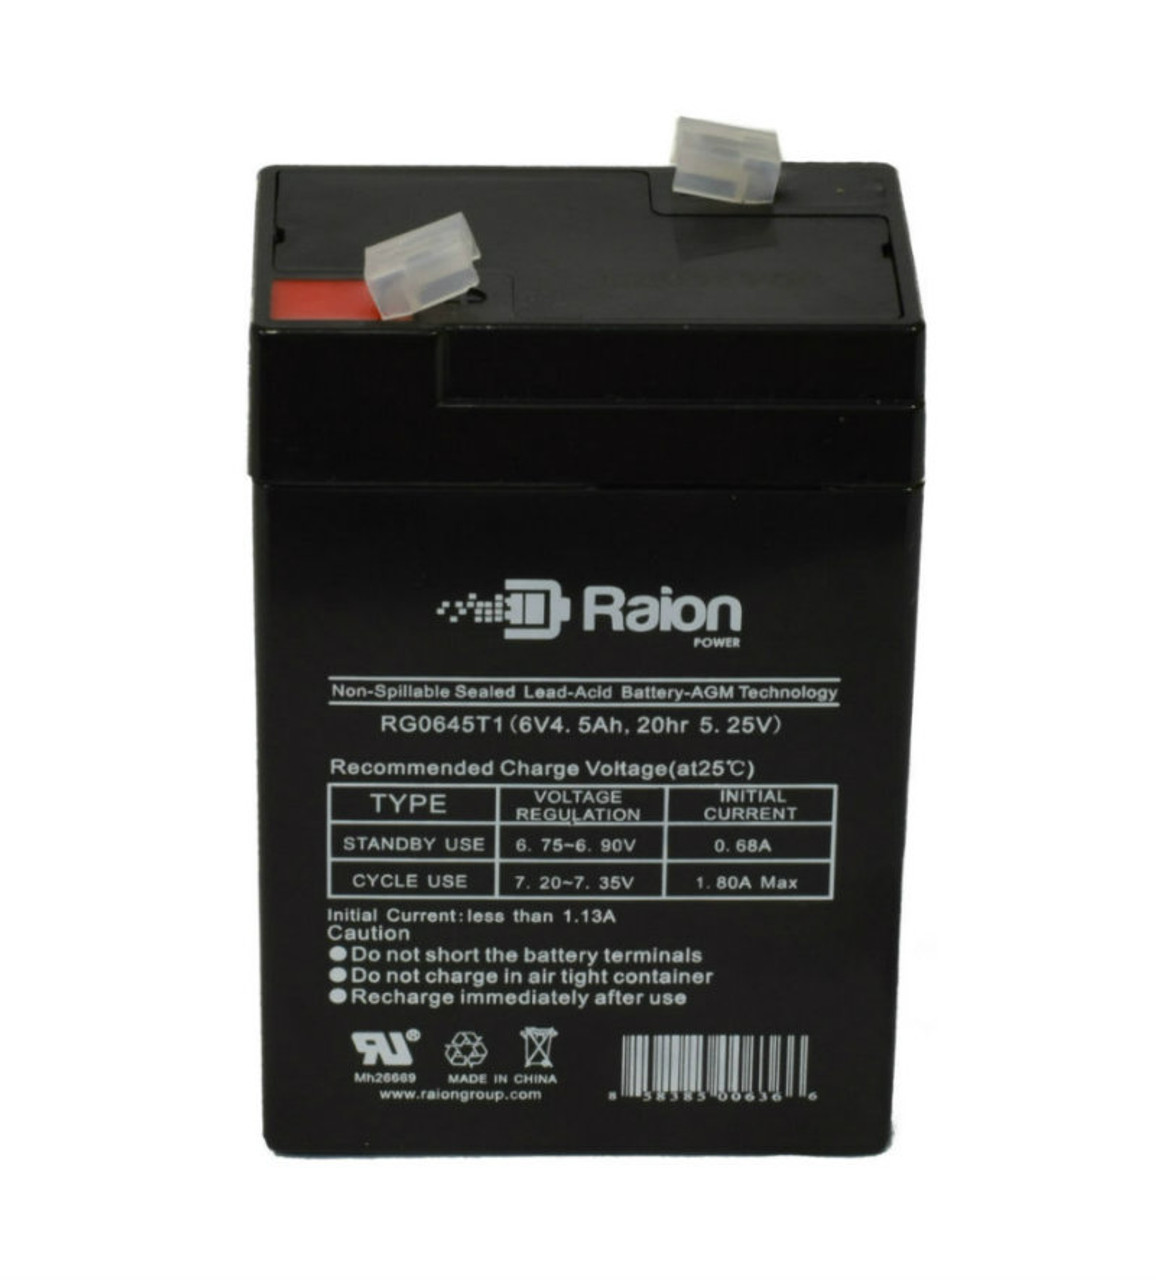 Raion Power RG0645T1 Replacement Battery Cartridge for Abbott Laboratories 75 Life Care Breeze